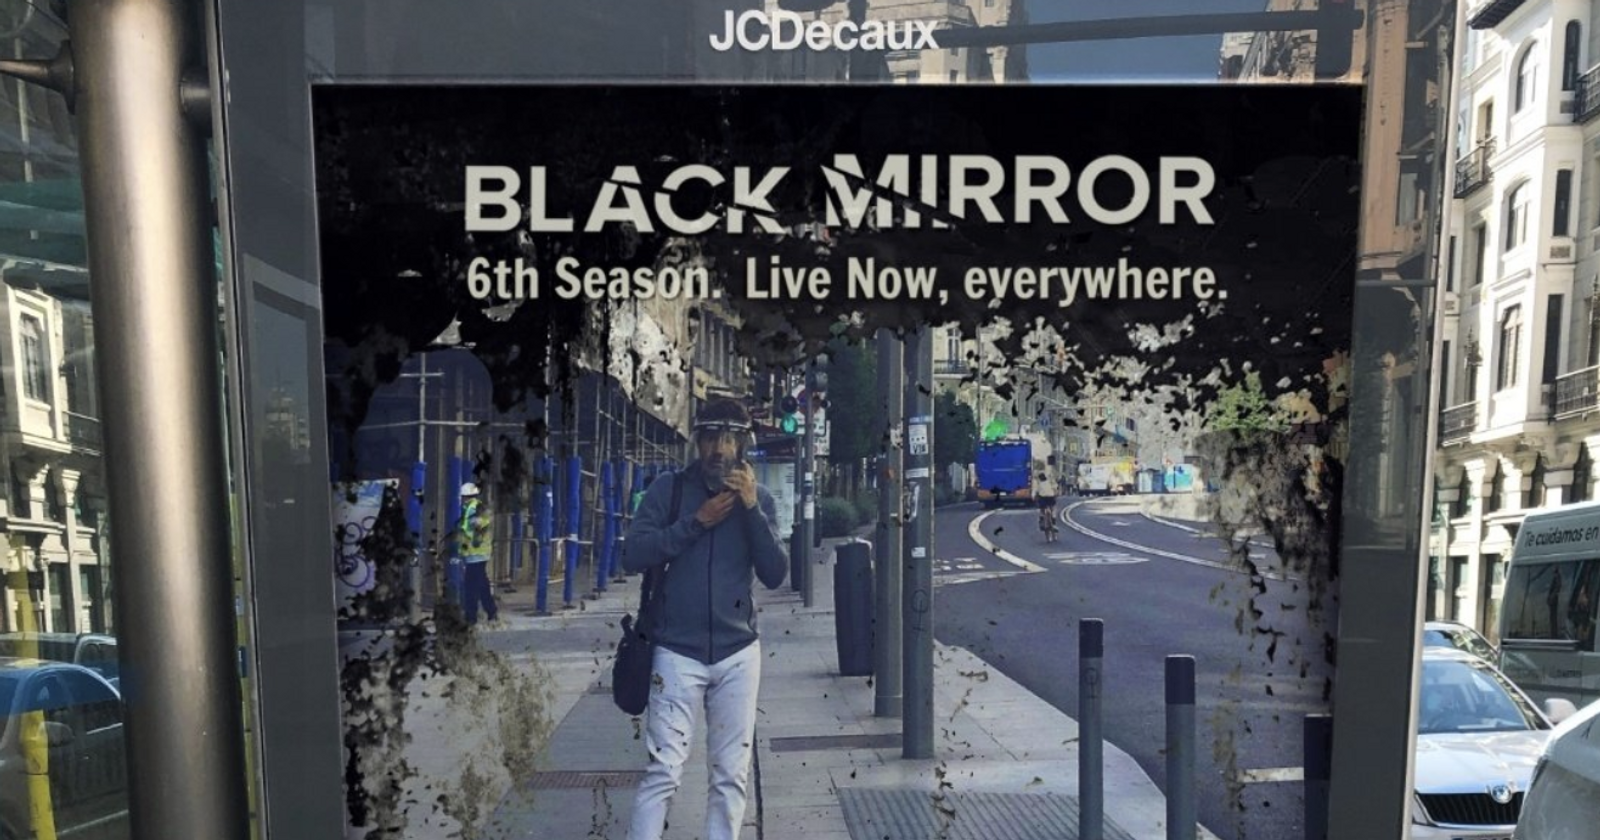 Black Mirror' Season 6: Release Date, Total Episodes, Plot, Star